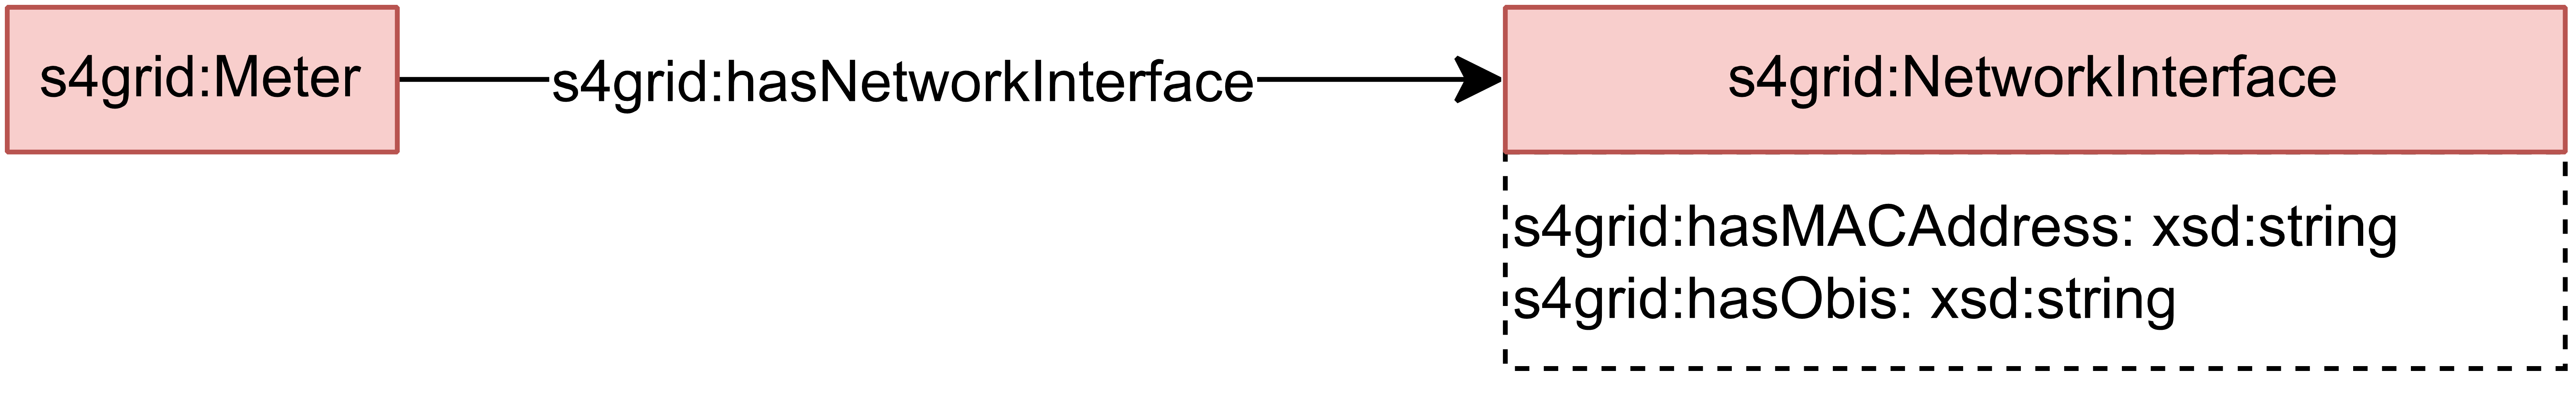 Network interface model